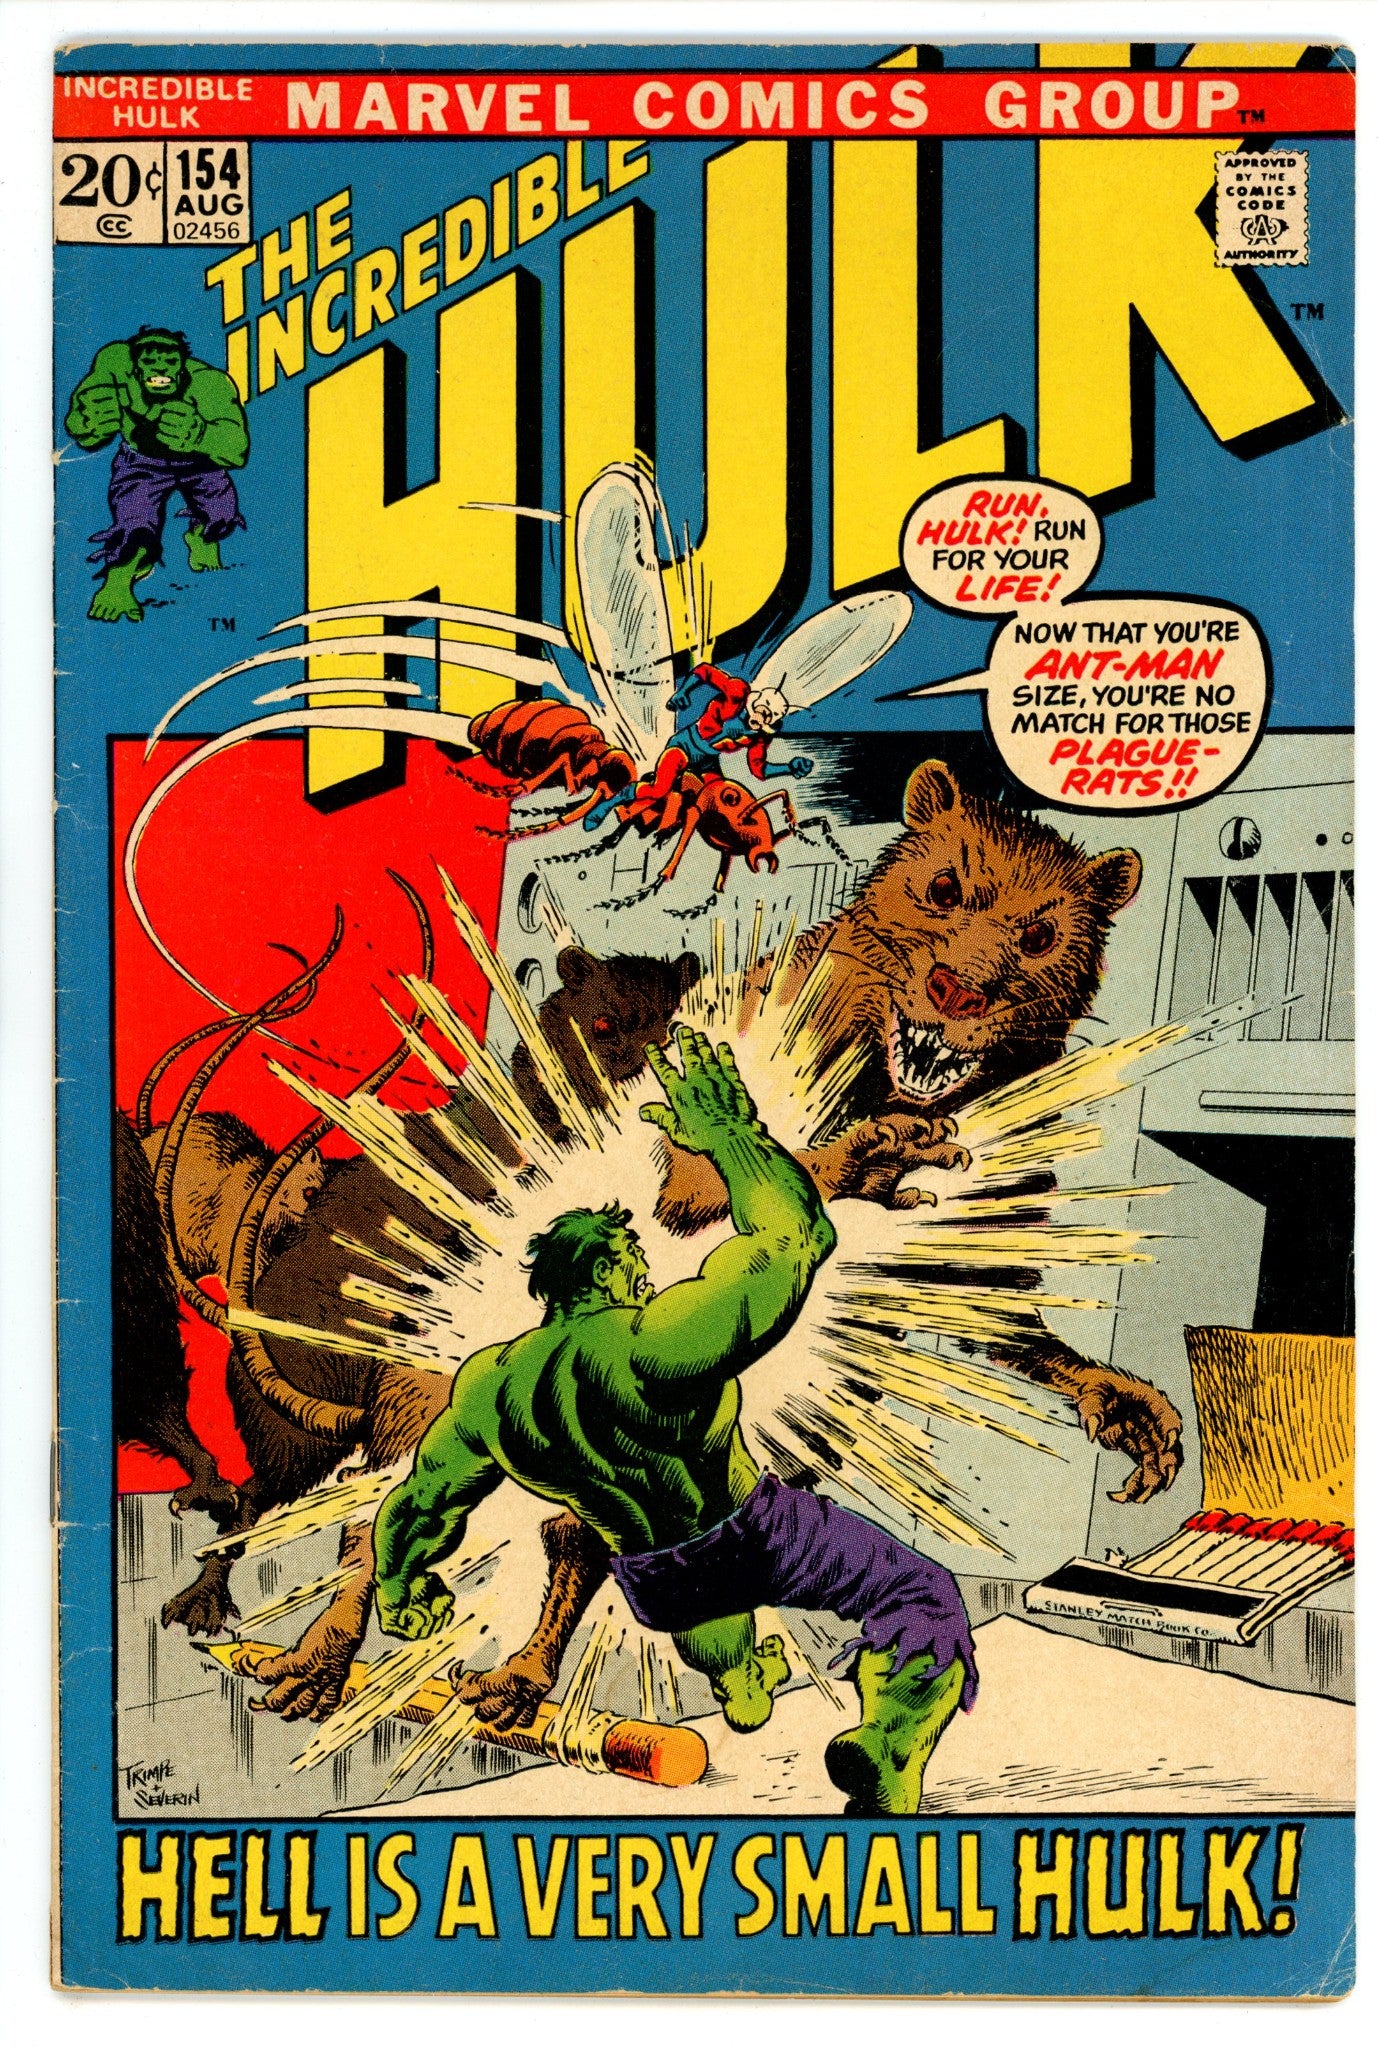 The Incredible Hulk Vol 1 154 VG (4.0) (1972) 